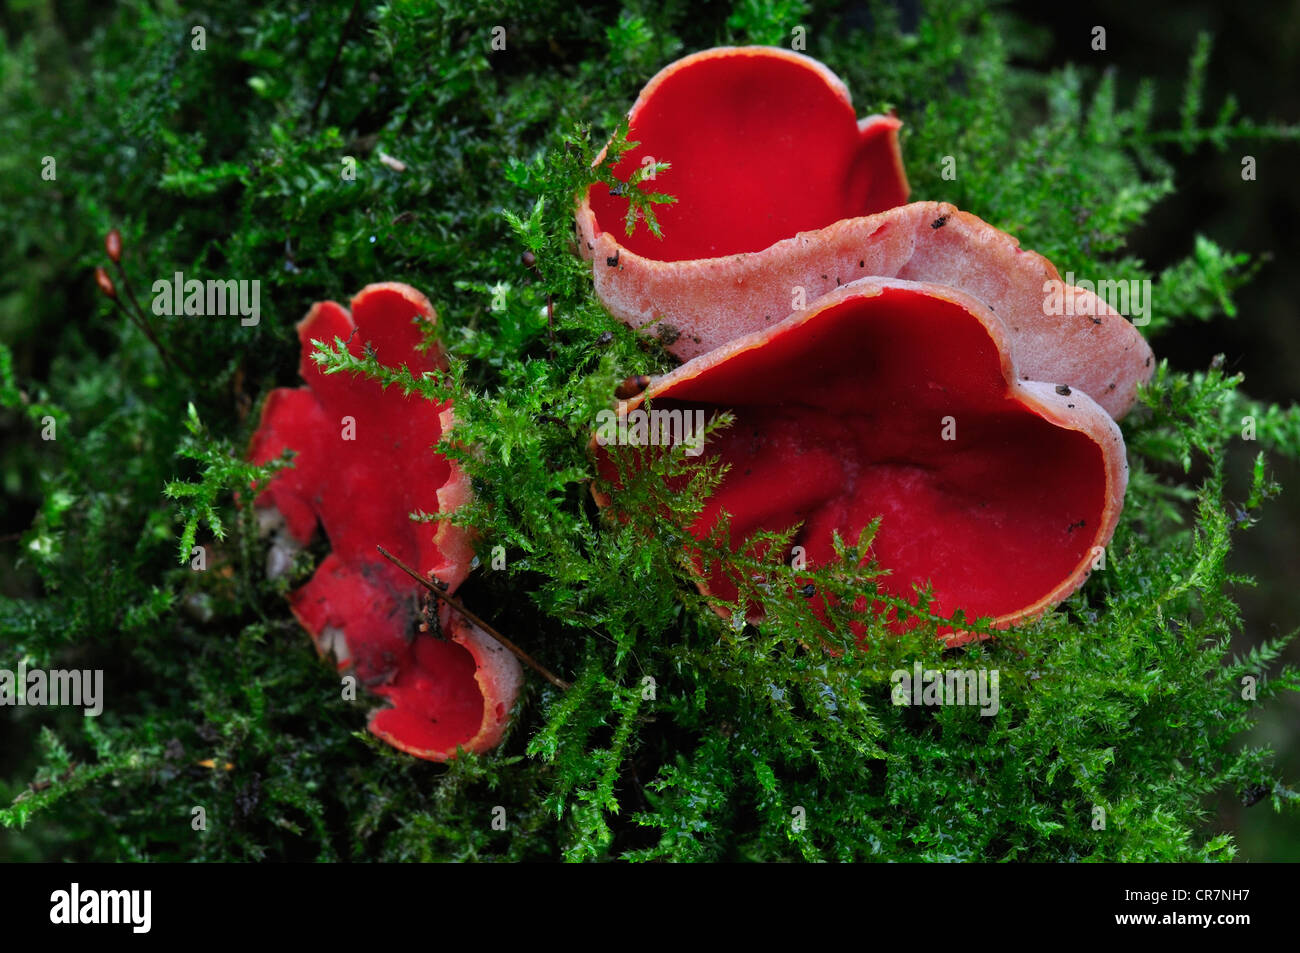 Scarlet elf cup fungus. Dorset, UK March 2012 Stock Photo